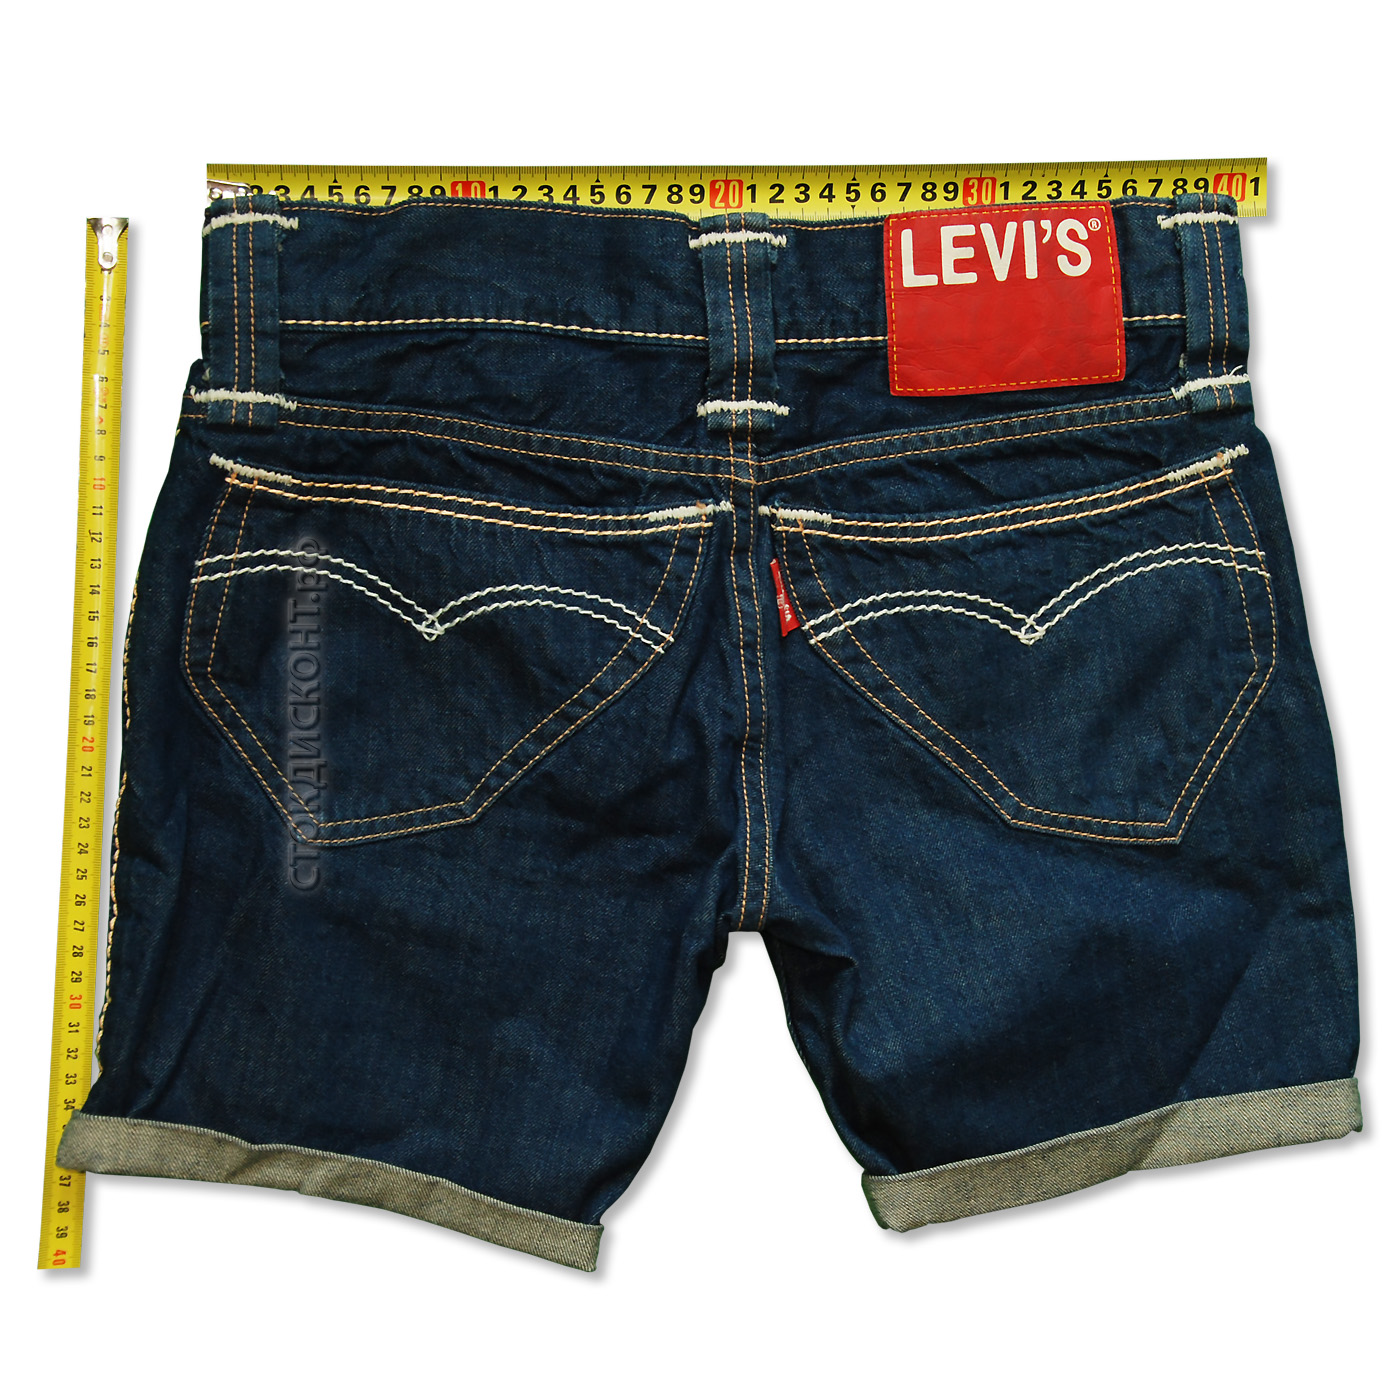 LEVI'S RED Shorts Vintage